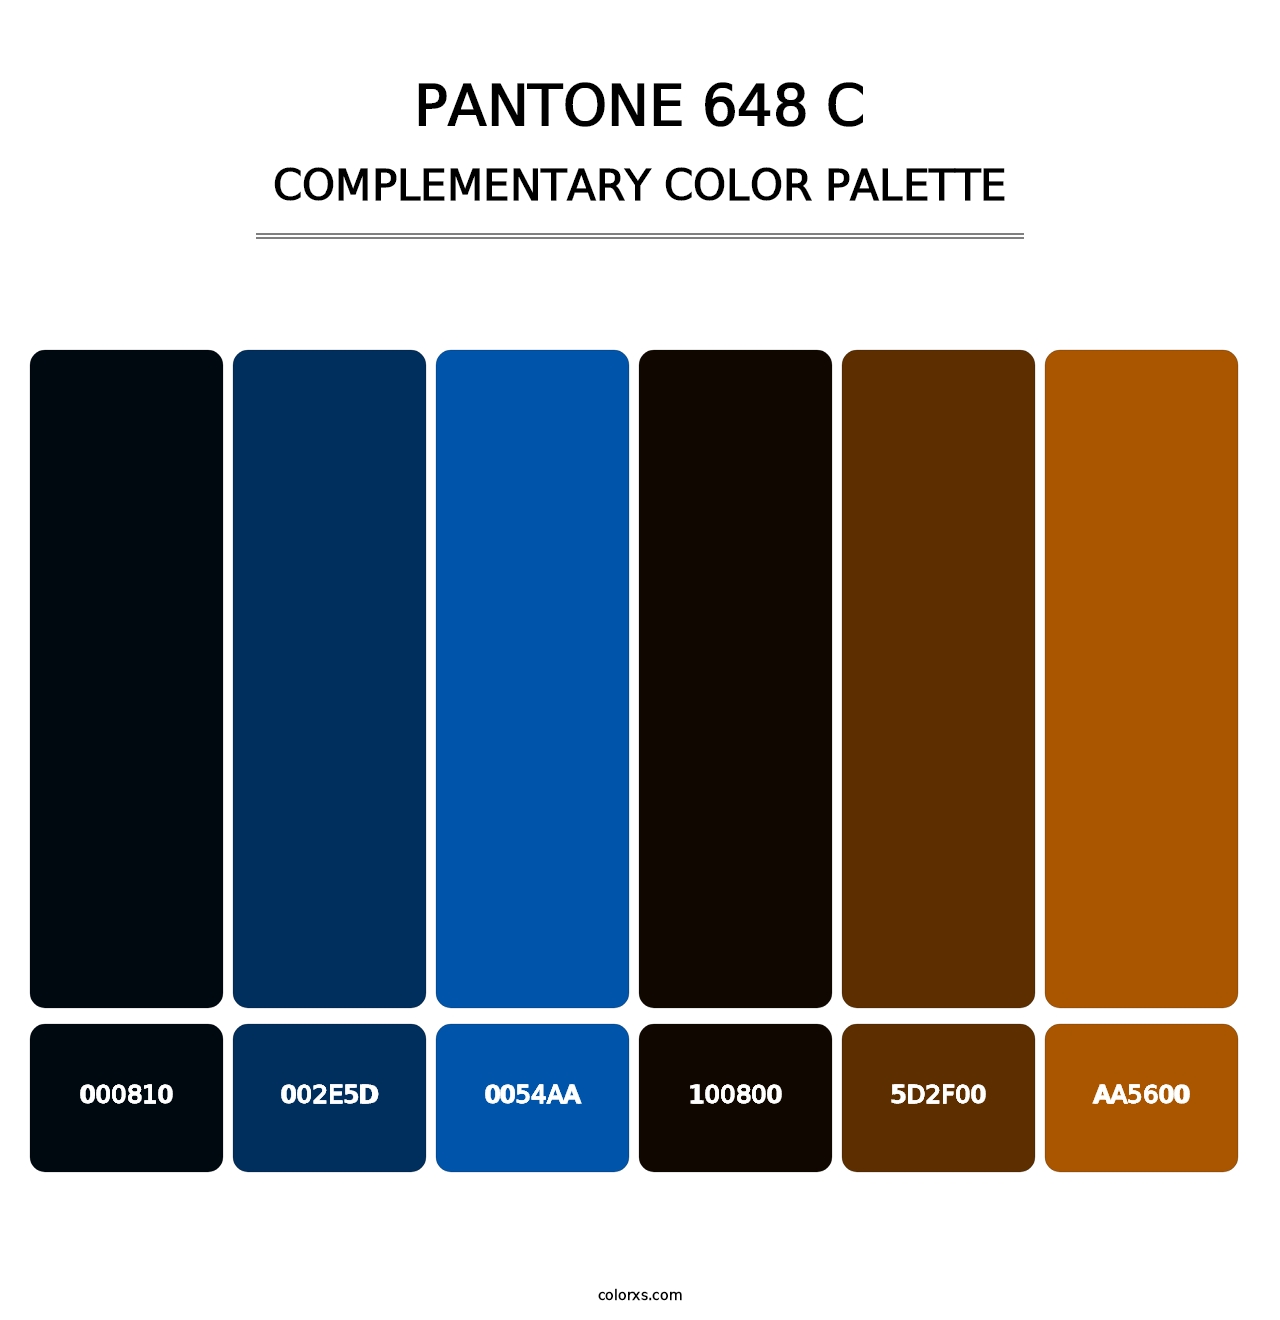 PANTONE 648 C - Complementary Color Palette